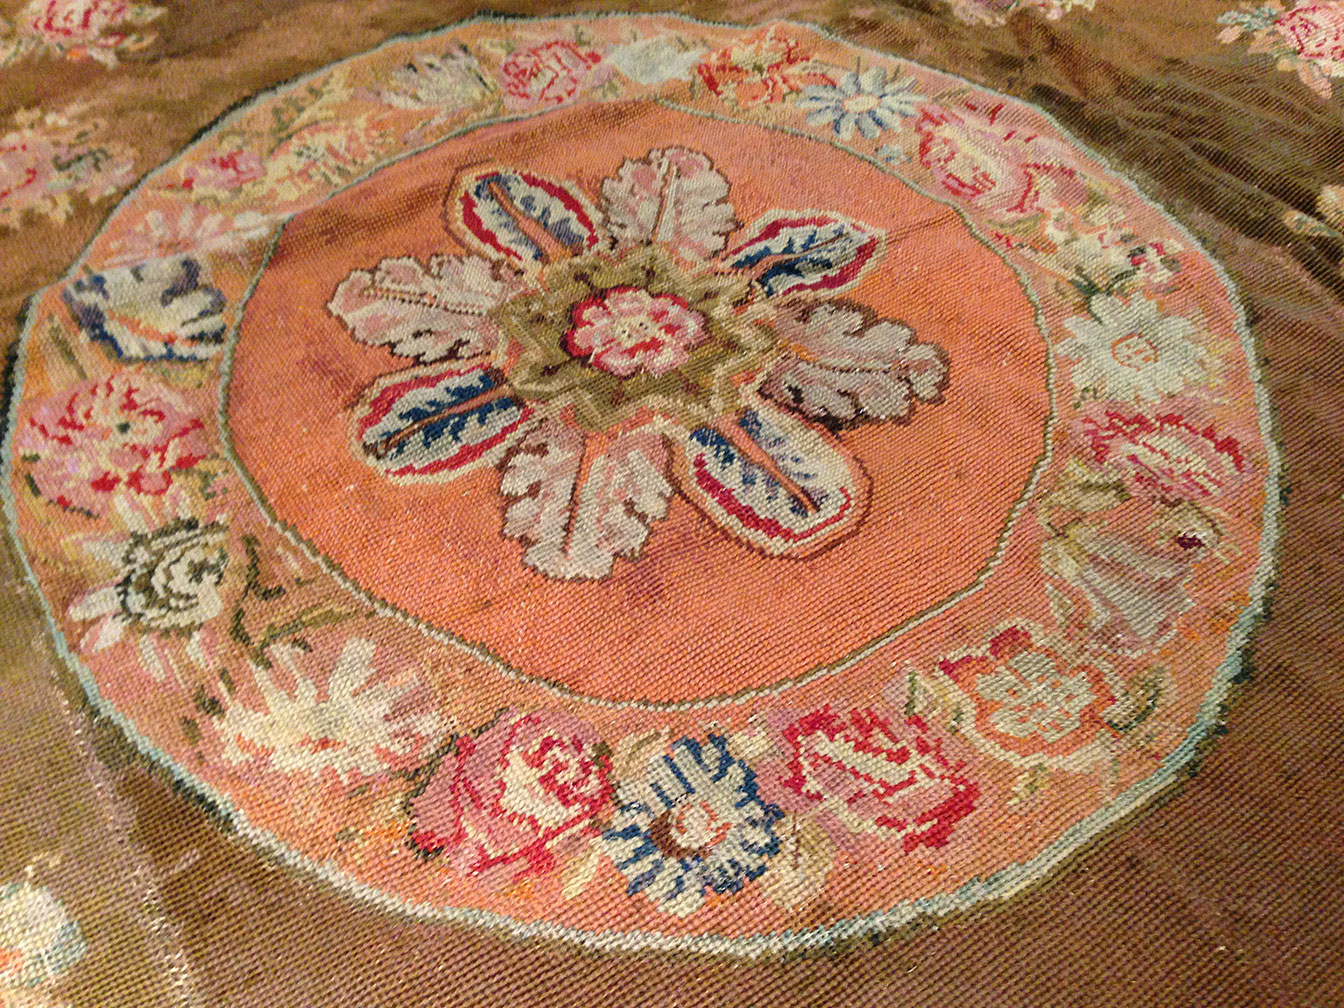 Antique needlepoint Carpet - # 50197